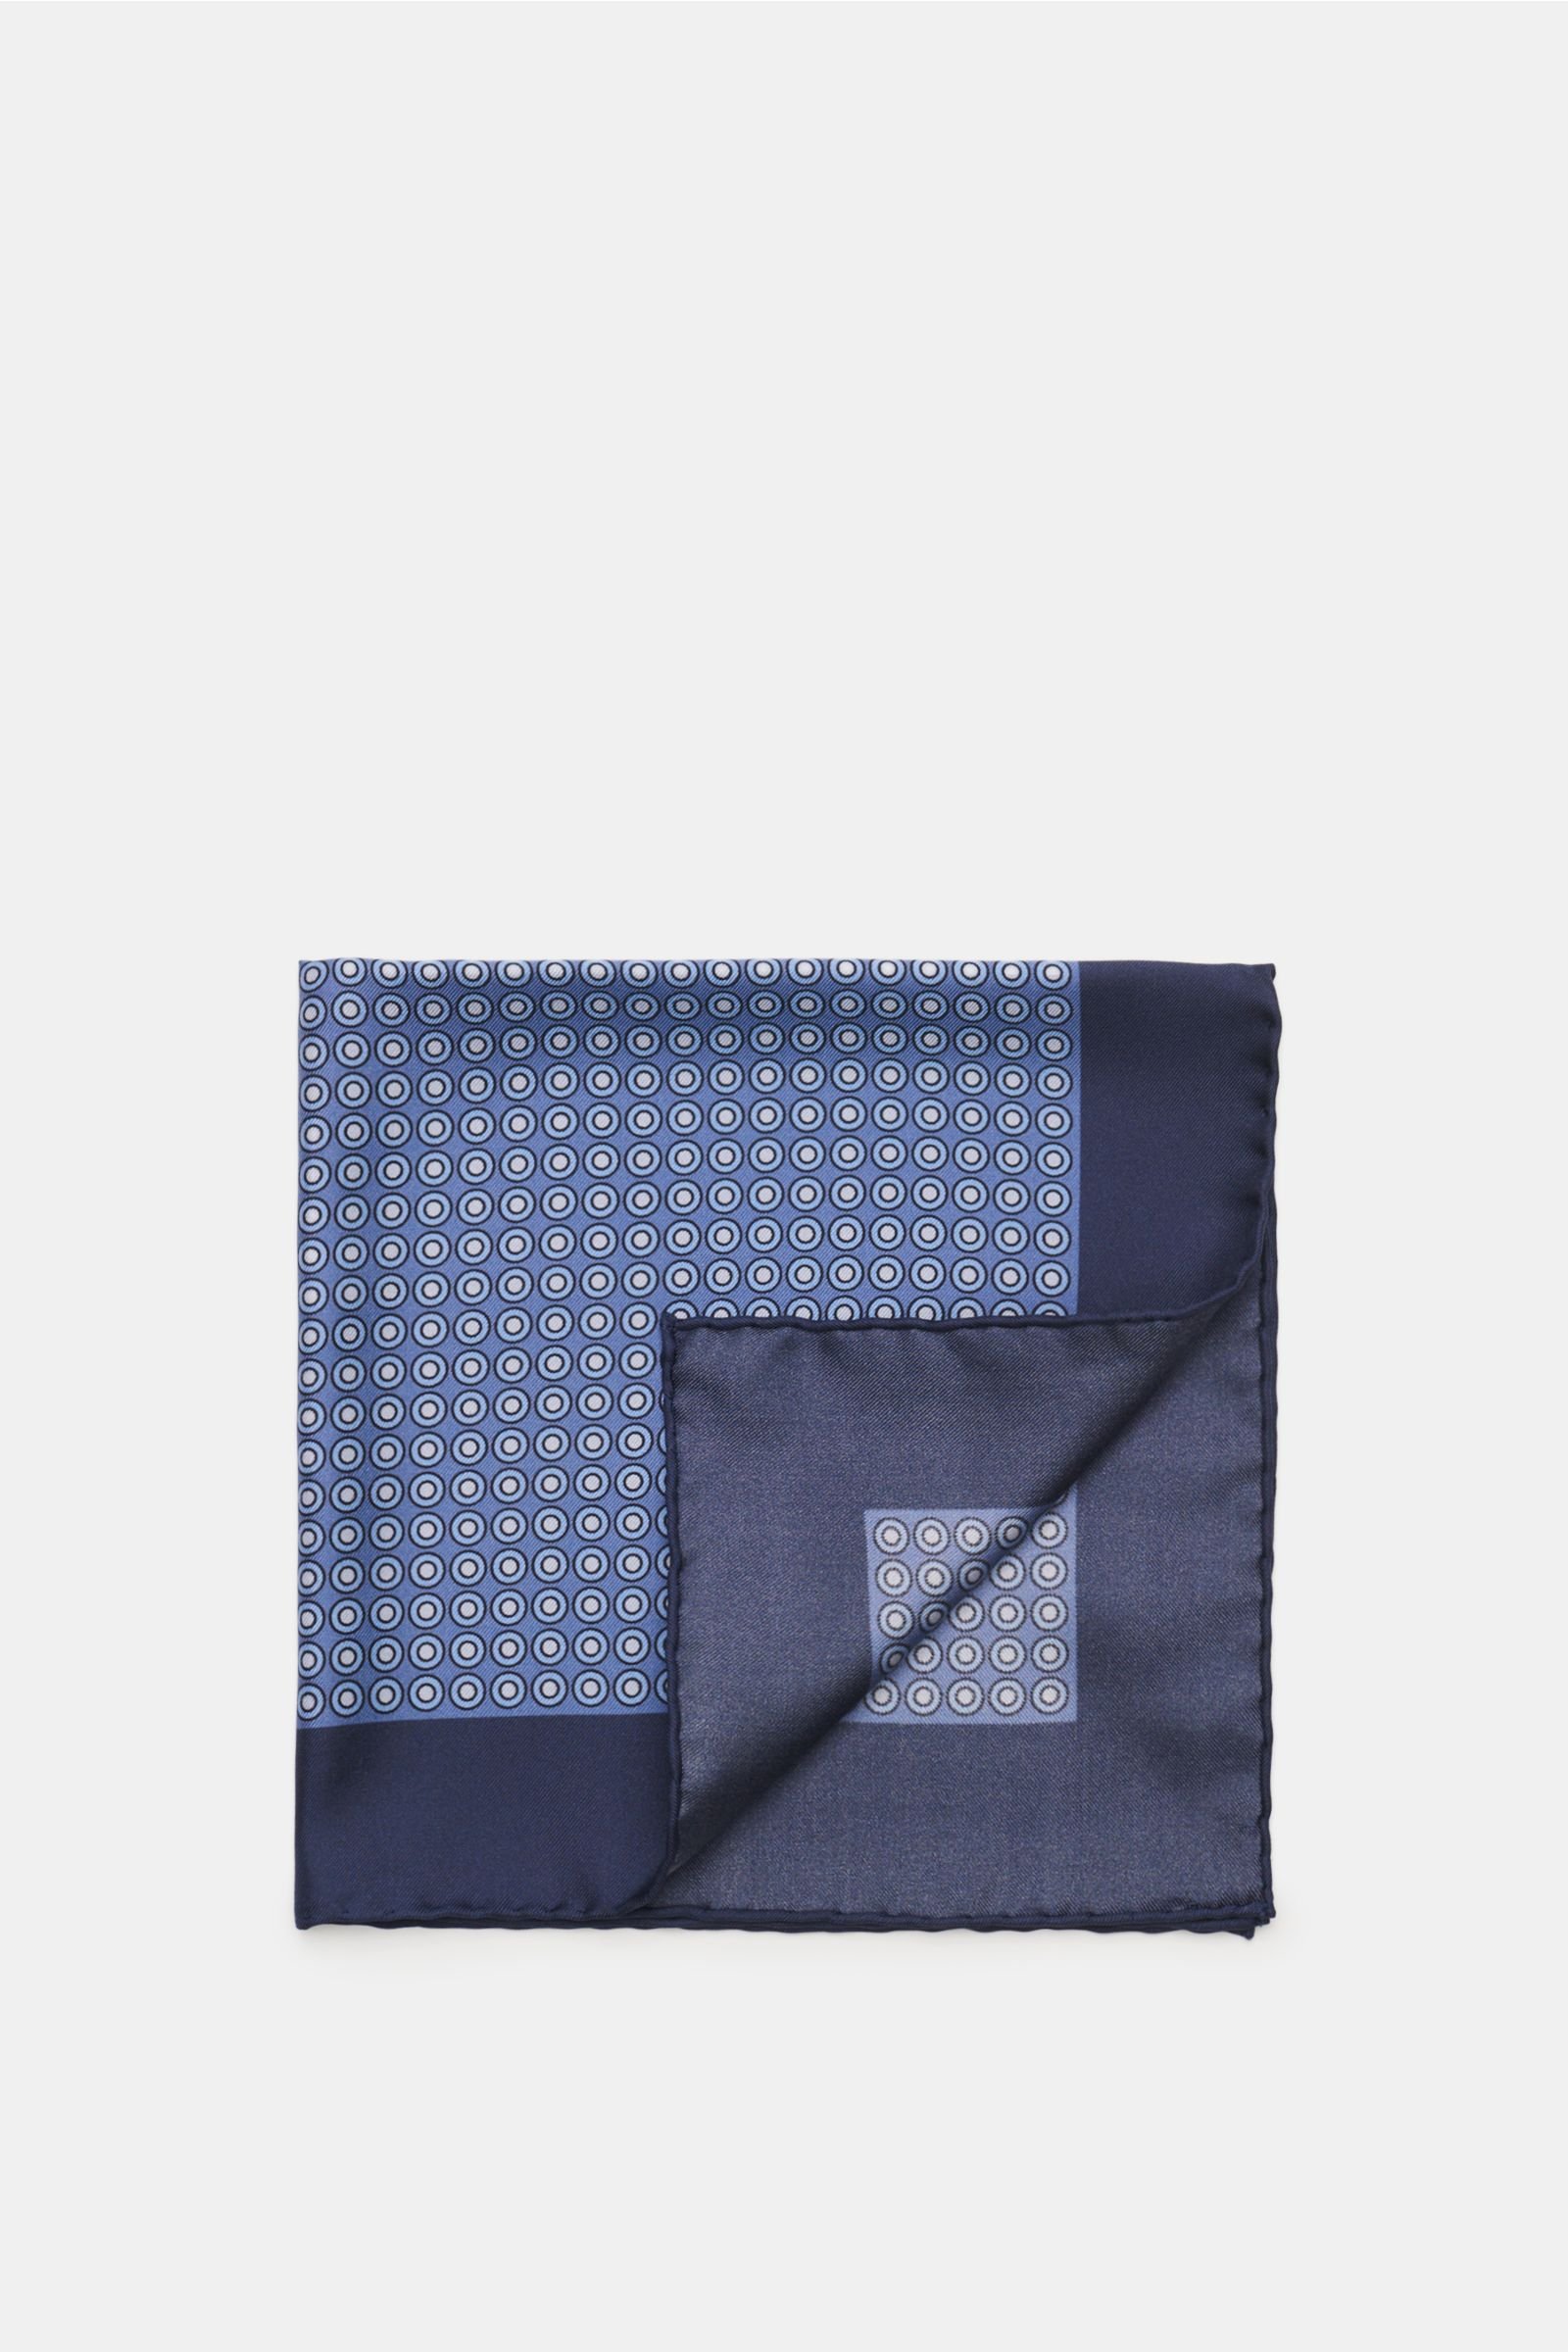 Pocket square grey-blue/navy polka dotted